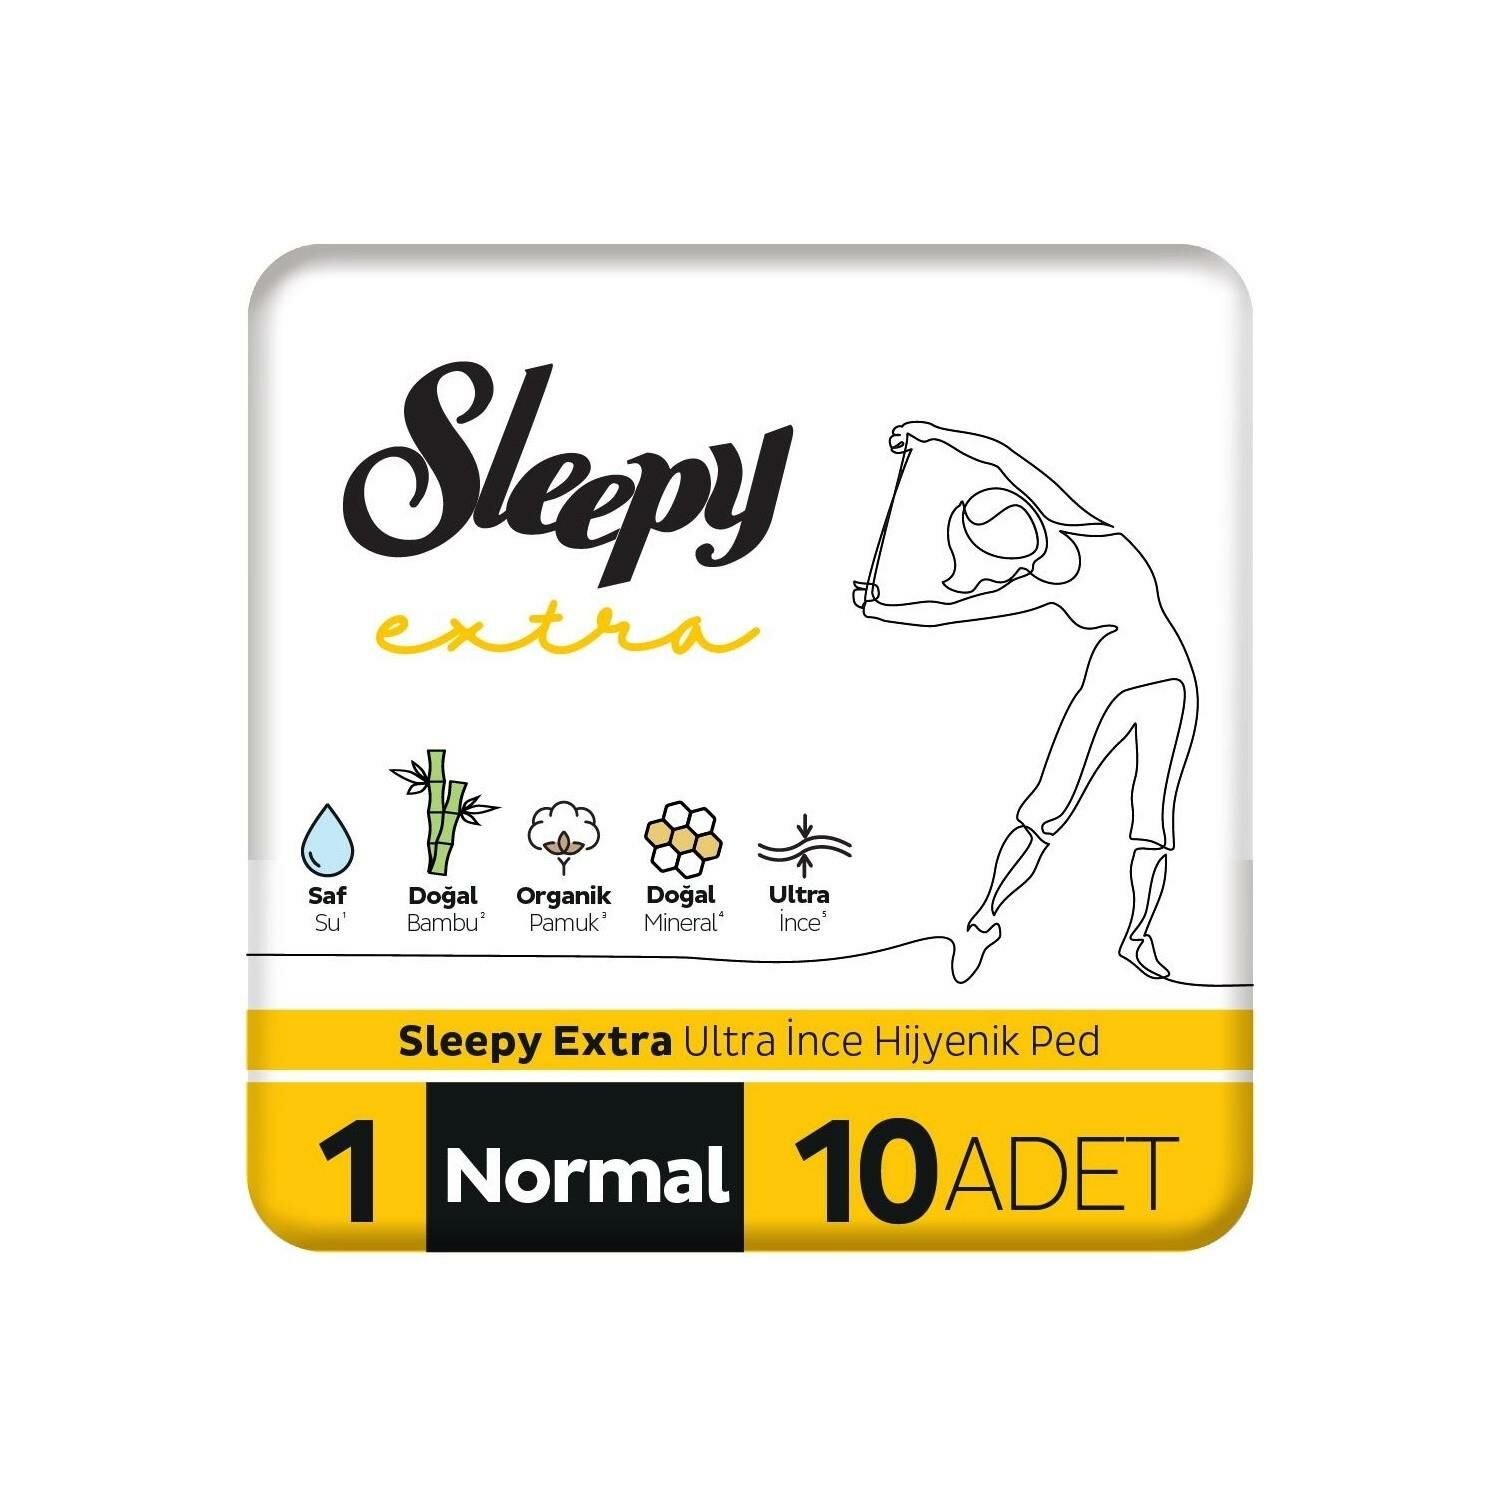 Sleepy Extra Ultra Ince Standart Hijyenik Ped Normal 10 Adet Ped